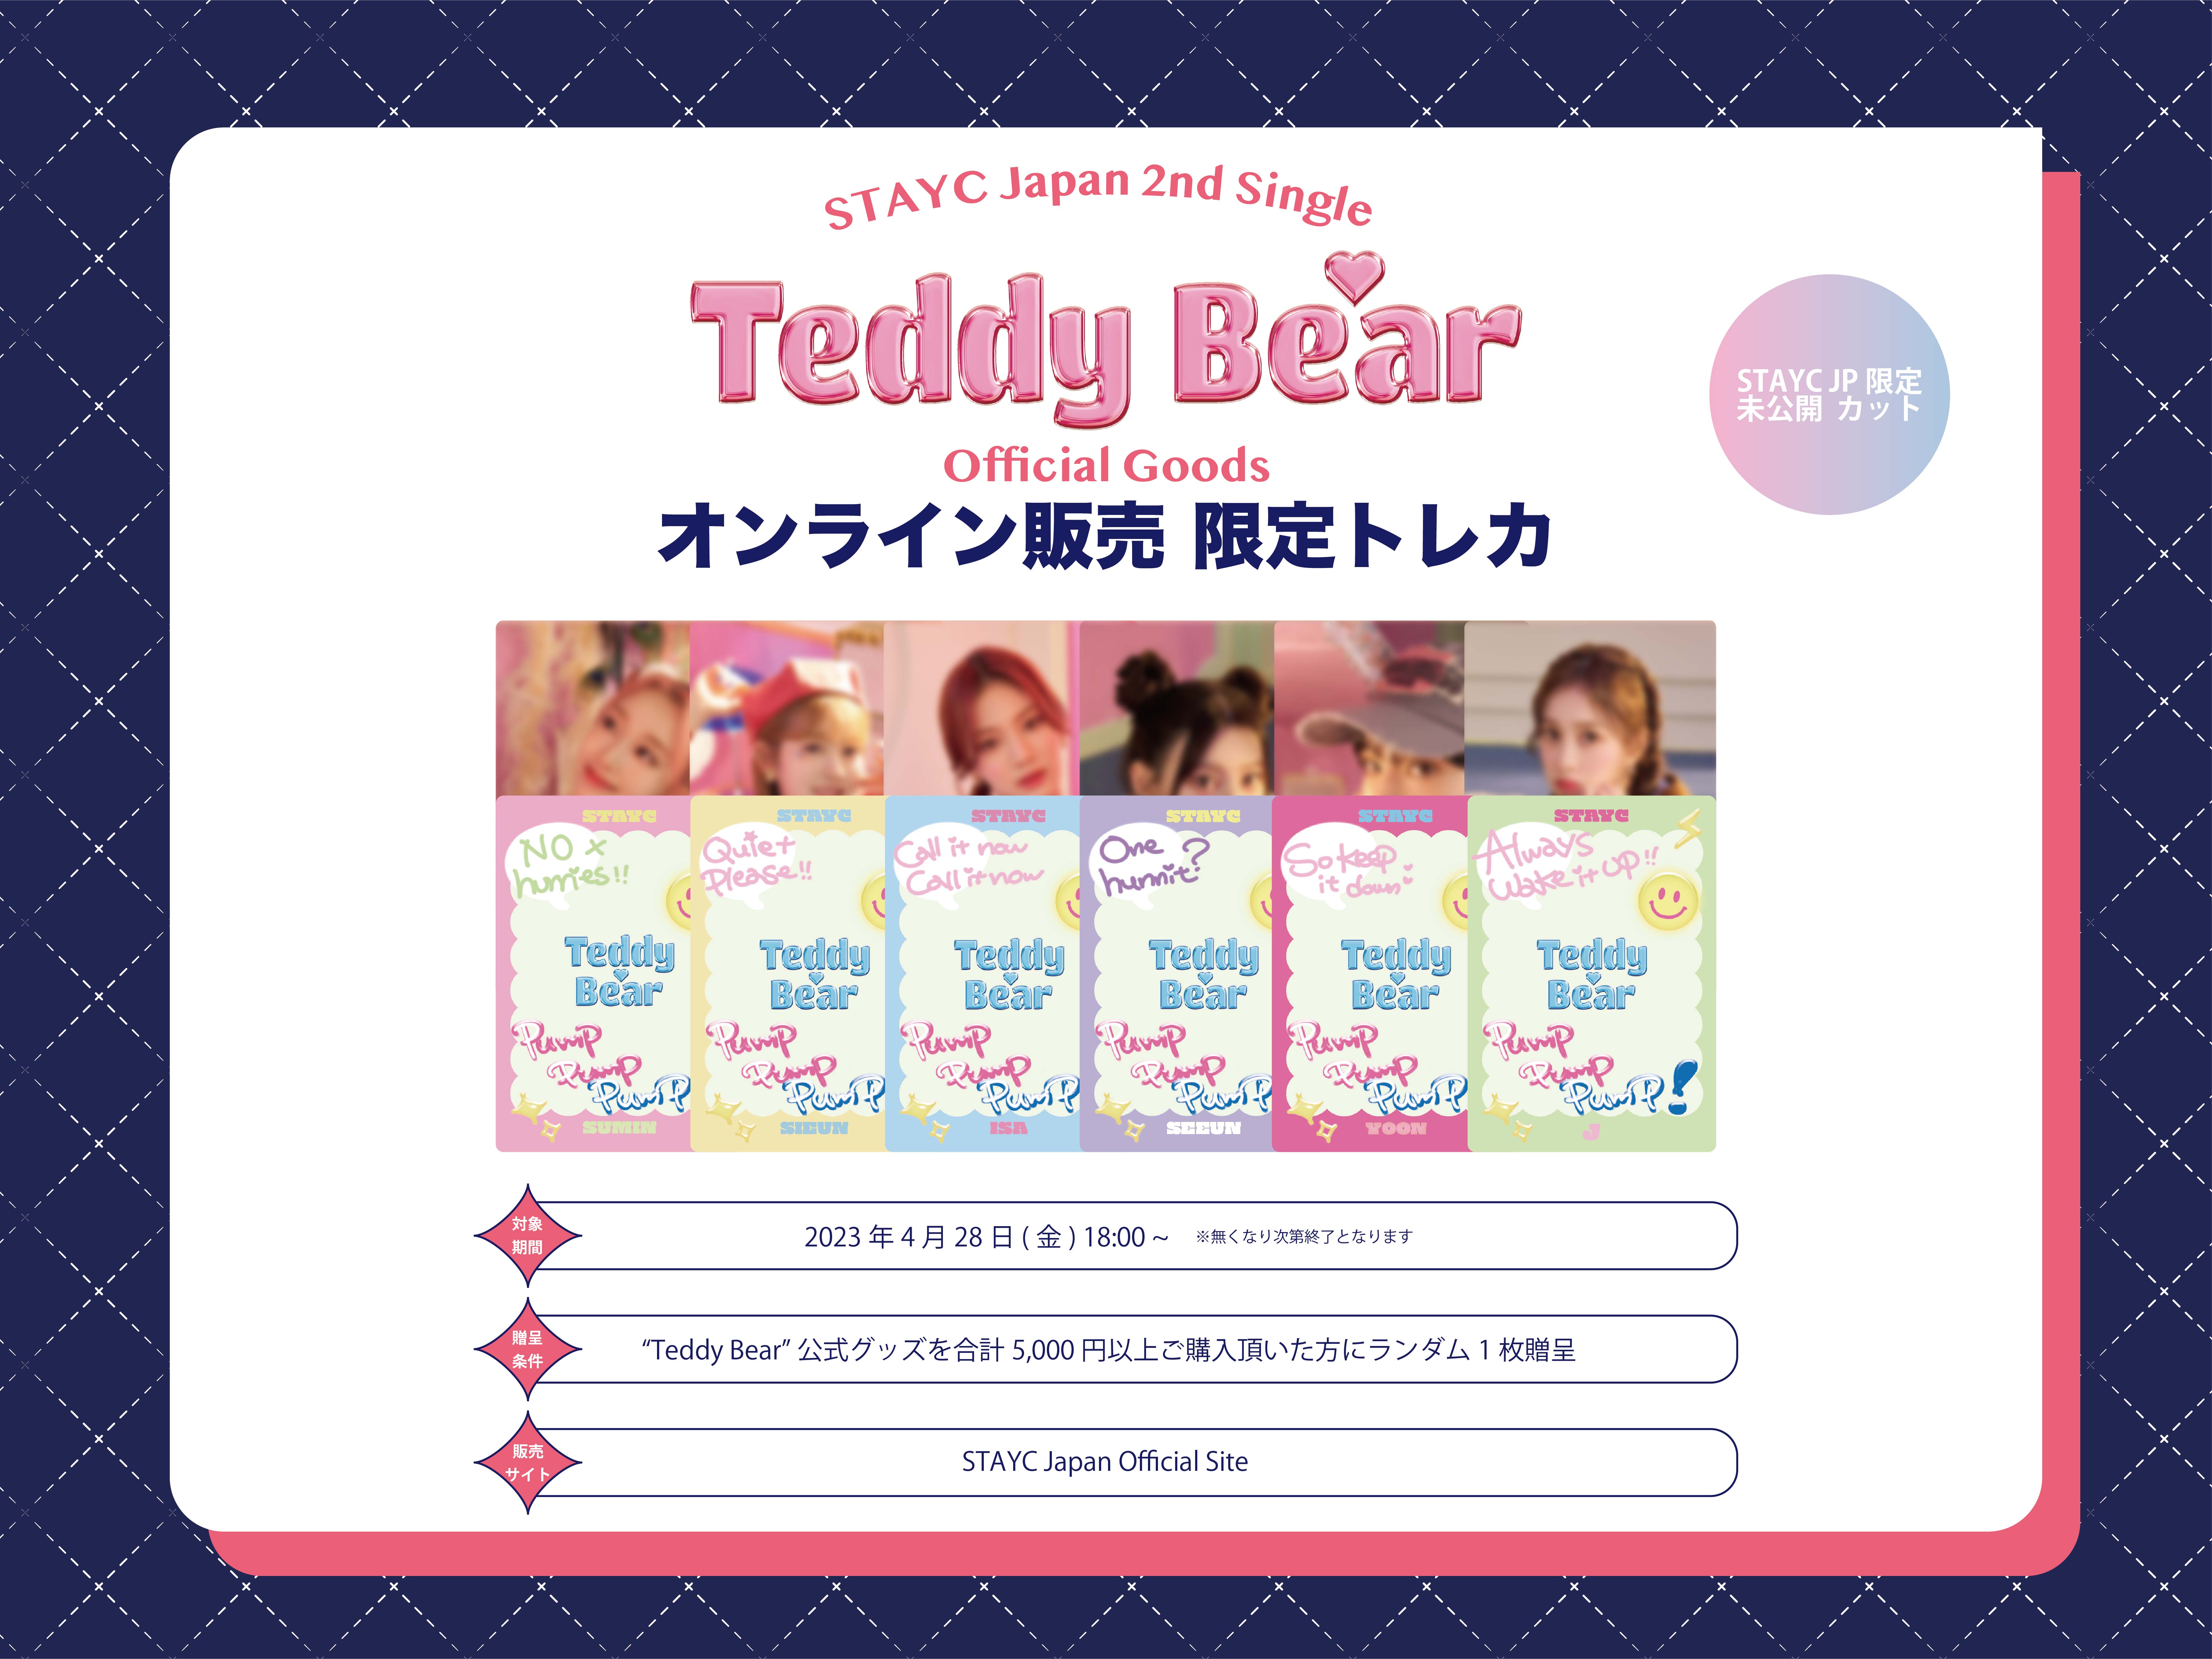 STAYC Japan 2nd Single “Teddy Bear” 公式グッズ オンライン販売のご 